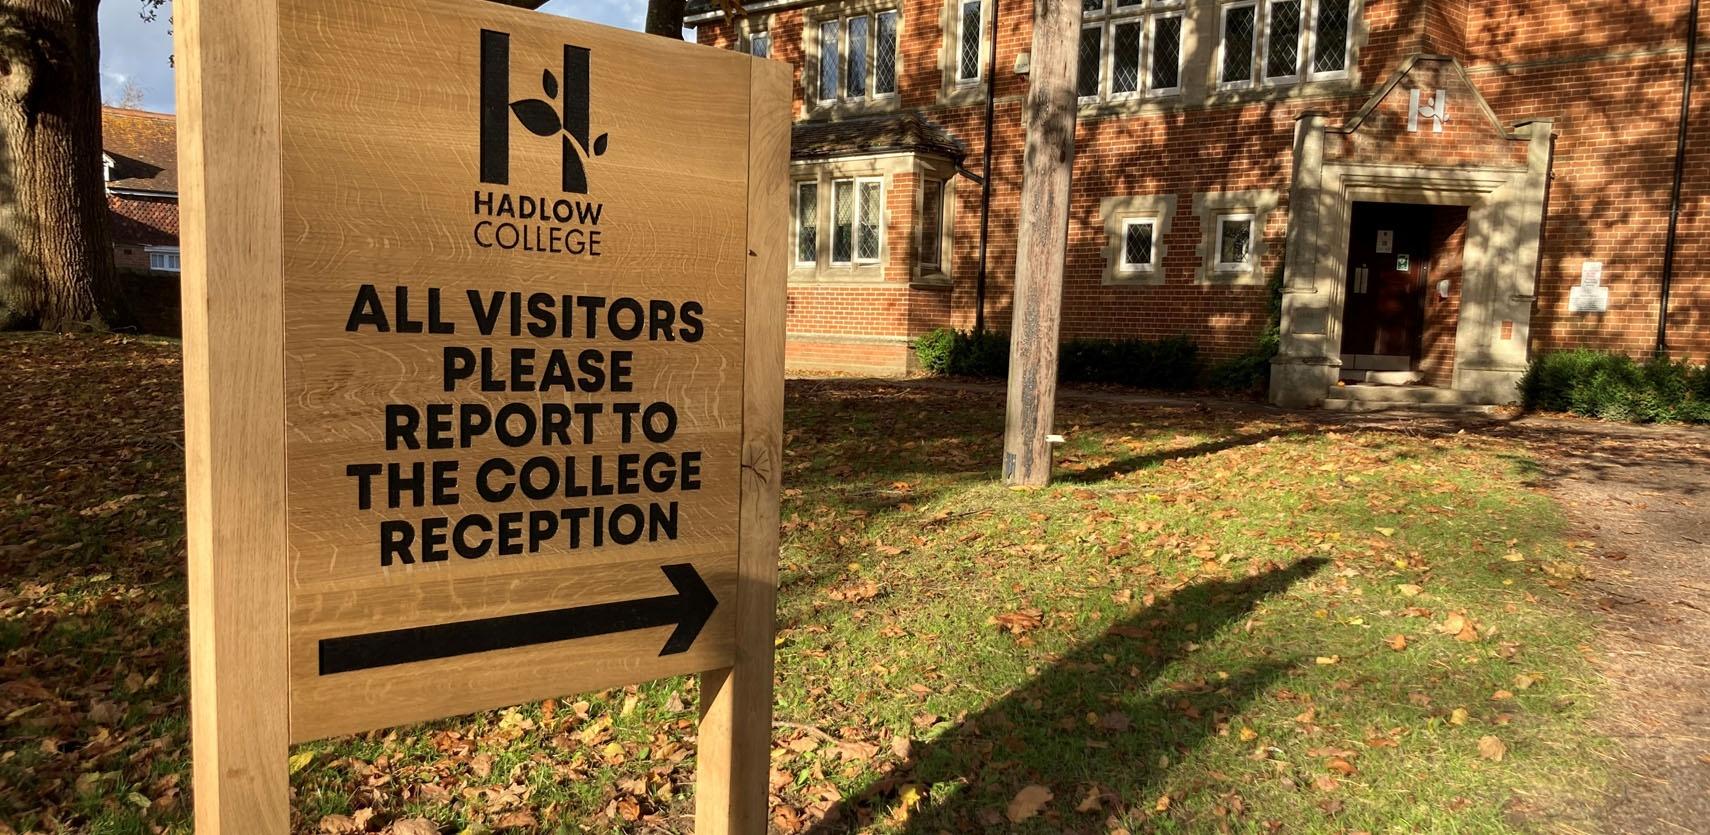 Hadlow College wooden reception sign